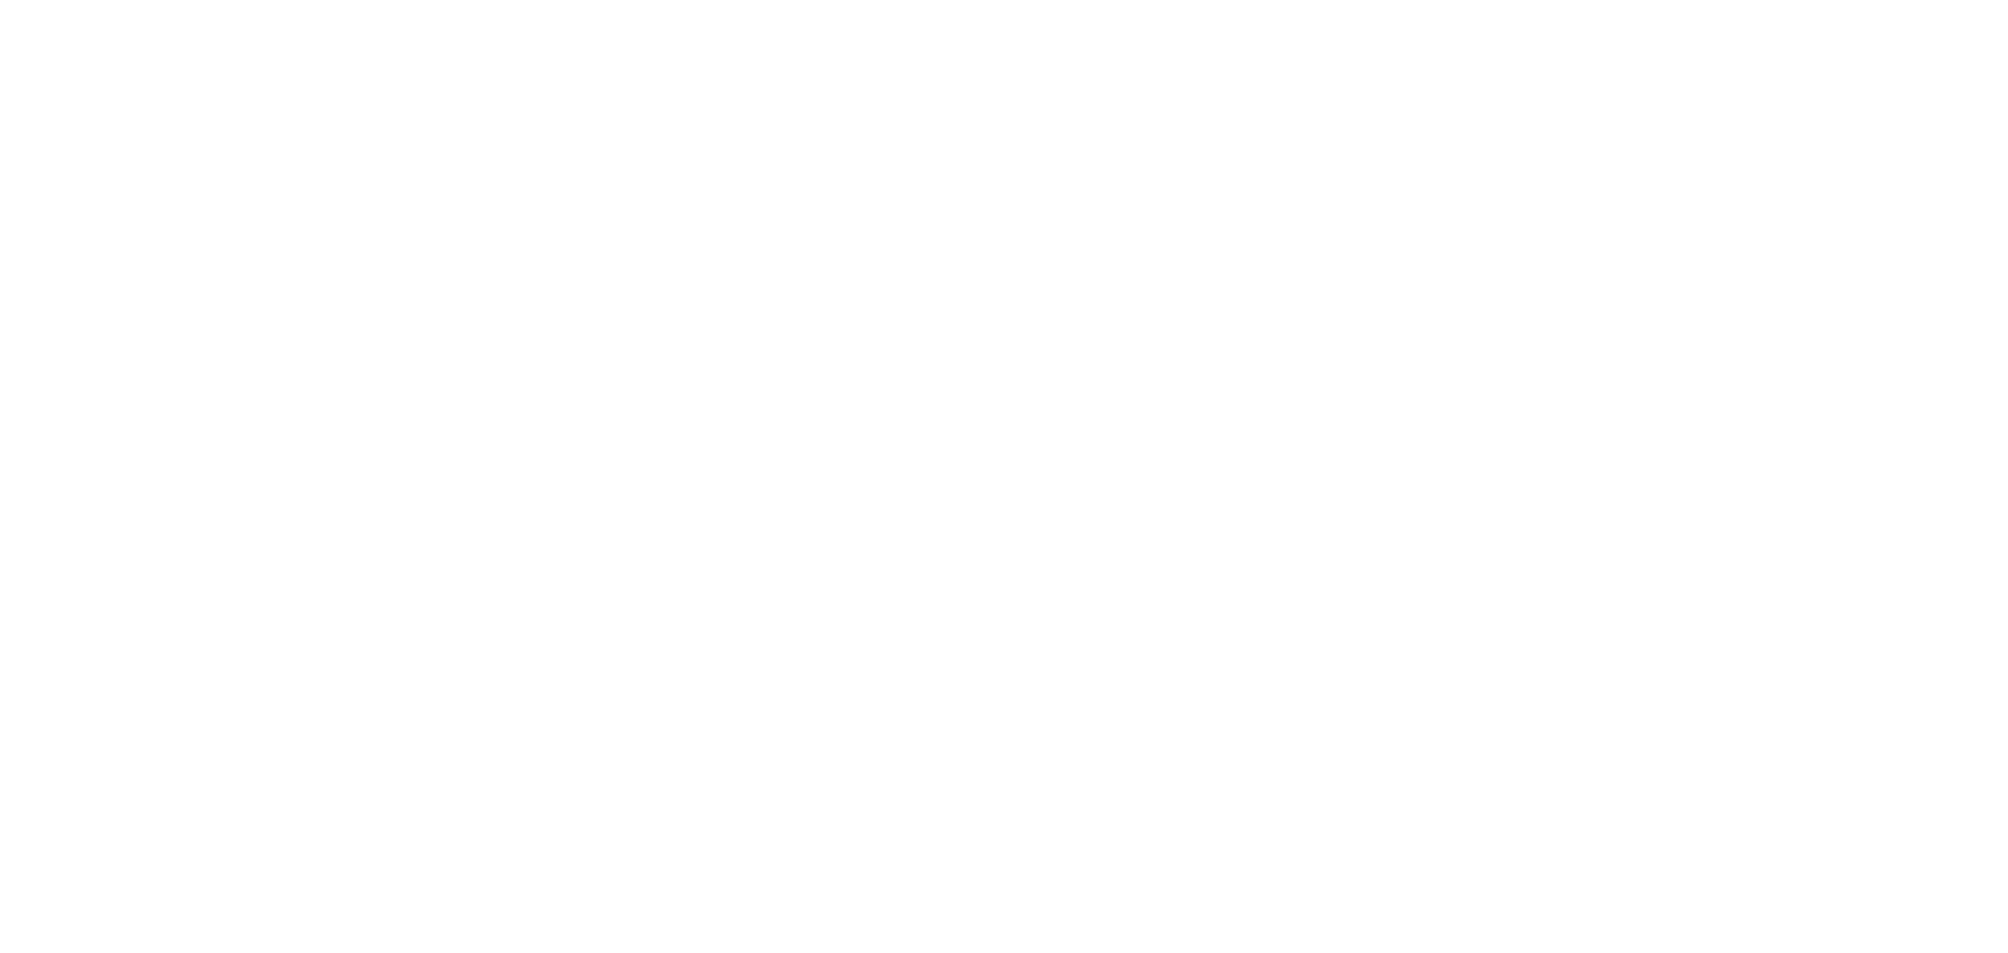 quicktotes white logo